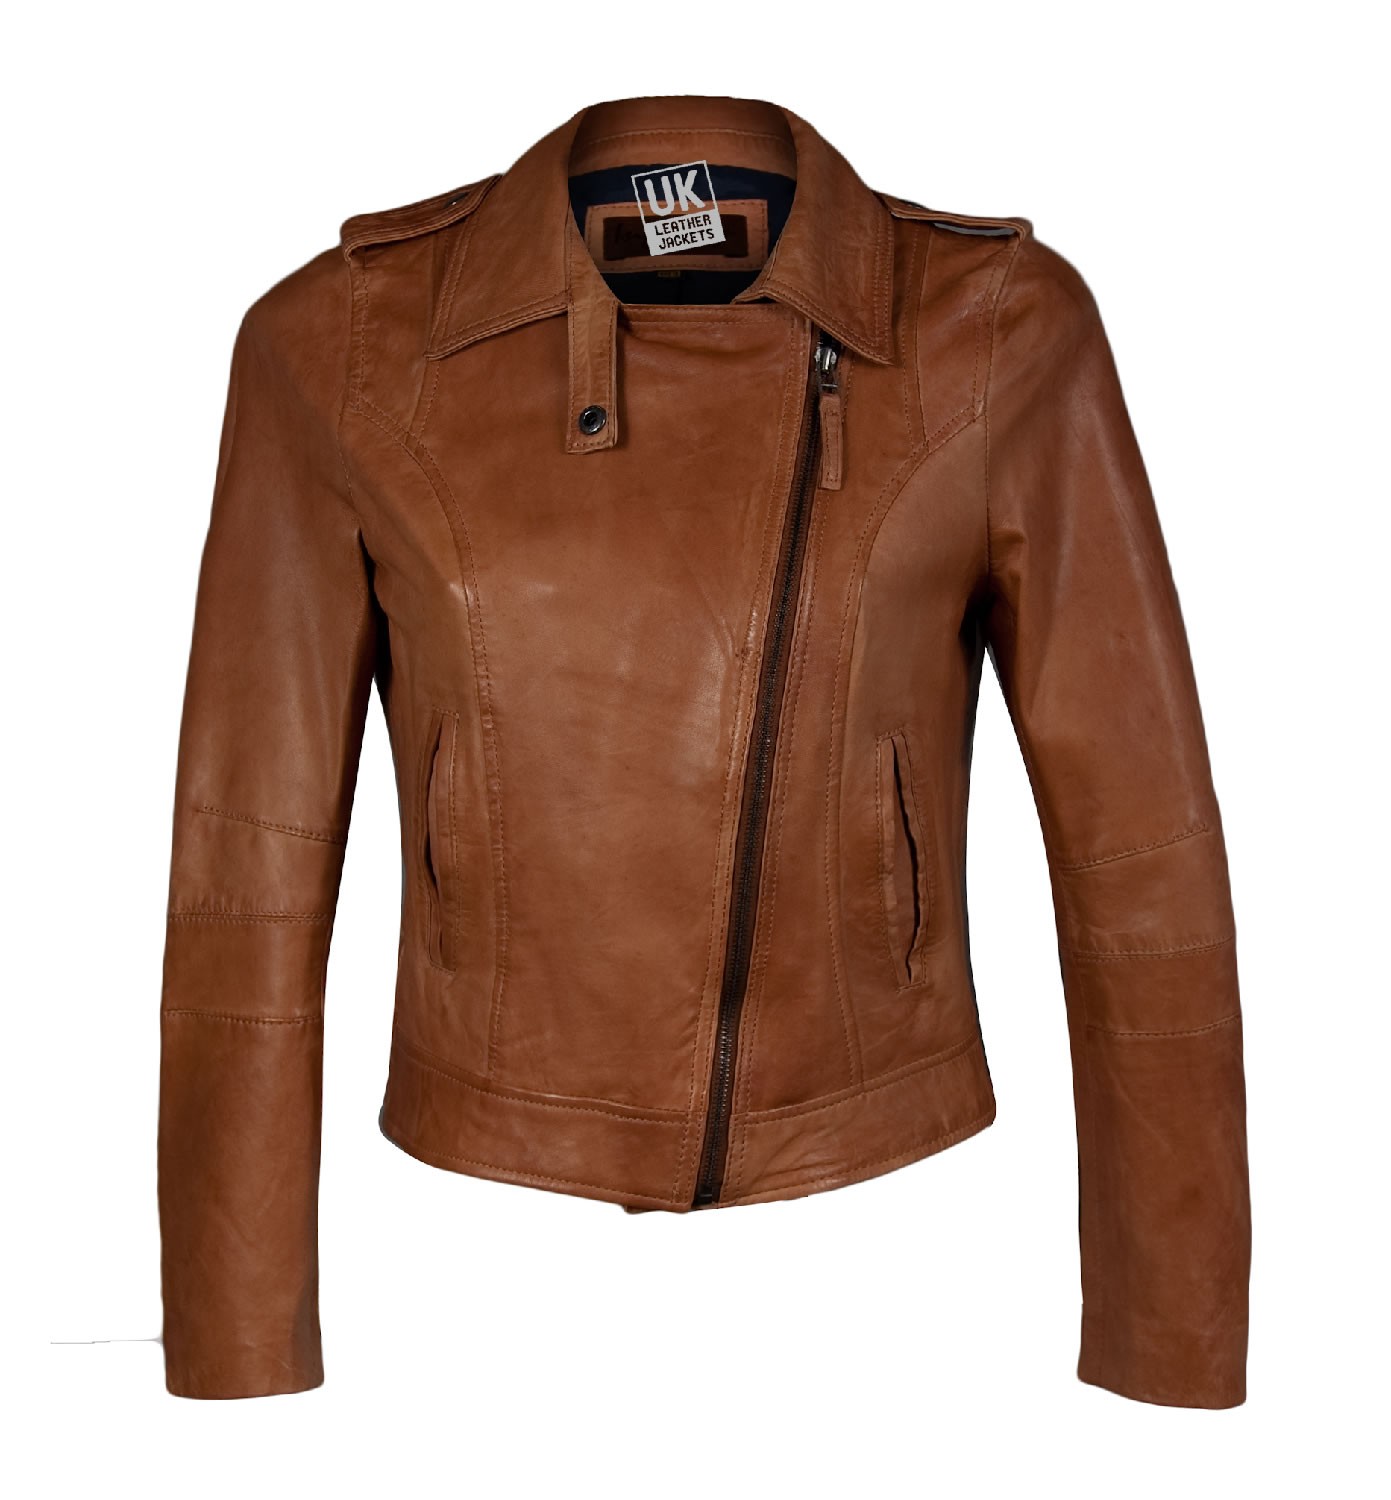 Womens tan brown leather jacket – Modern fashion jacket photo blog